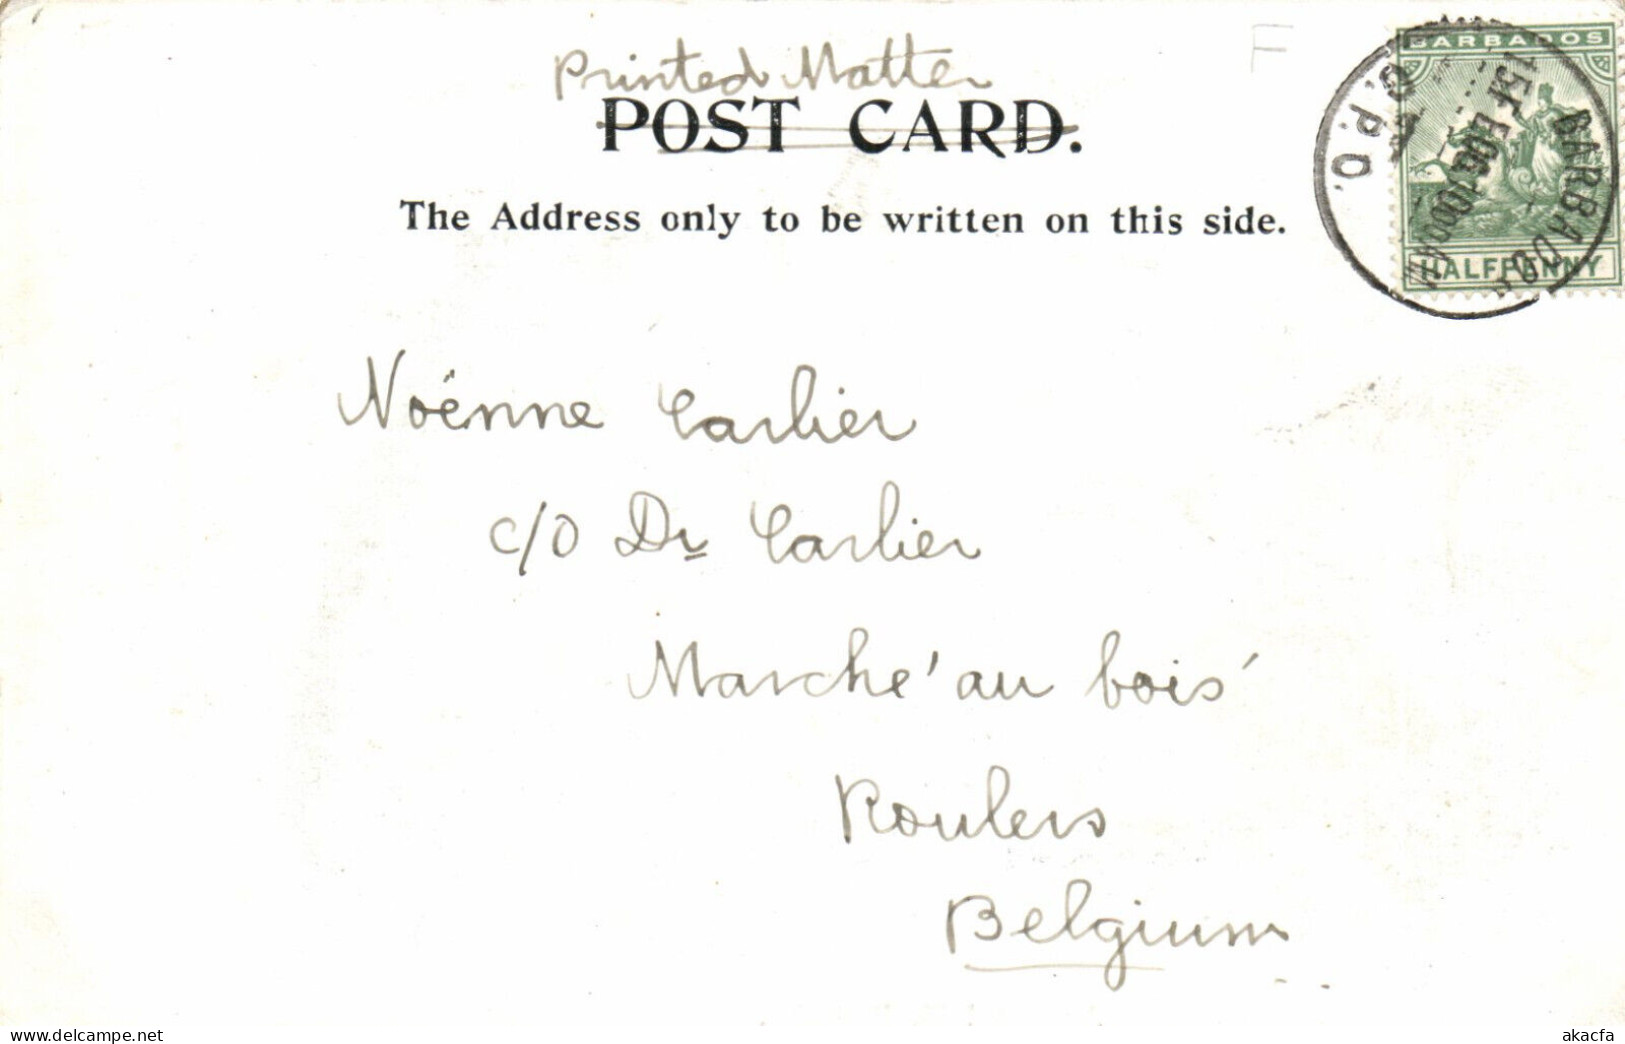 PC BARBADOS, AT GUN HILL, THE LION, Vintage Postcard (b50075) - Barbados